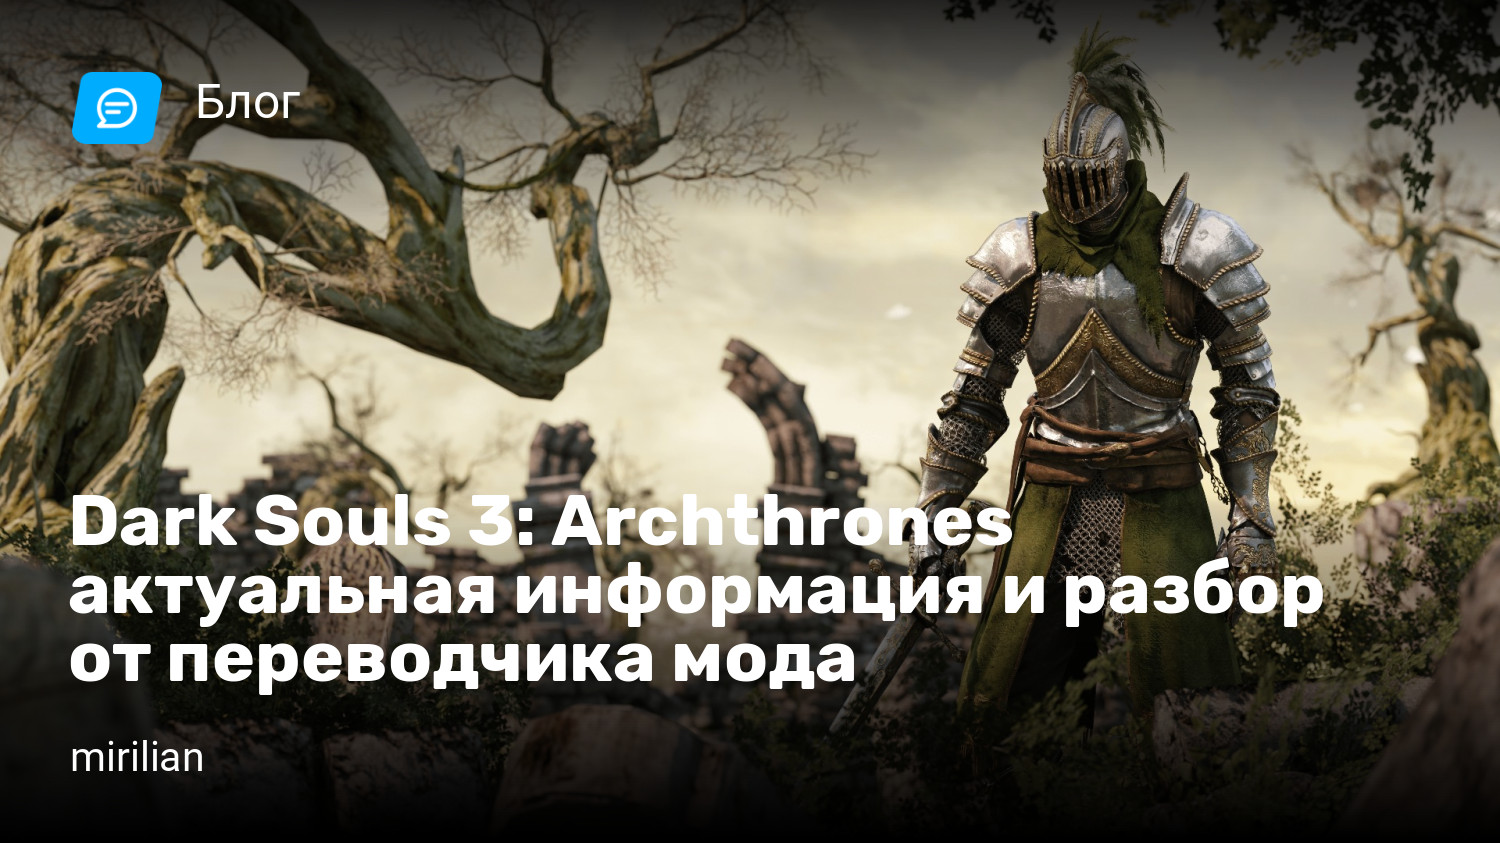 Dark souls archthrones mod. Dark Souls 3 archthrones. Dark Souls archthrones. Dark Souls III archthrones all Weapon.